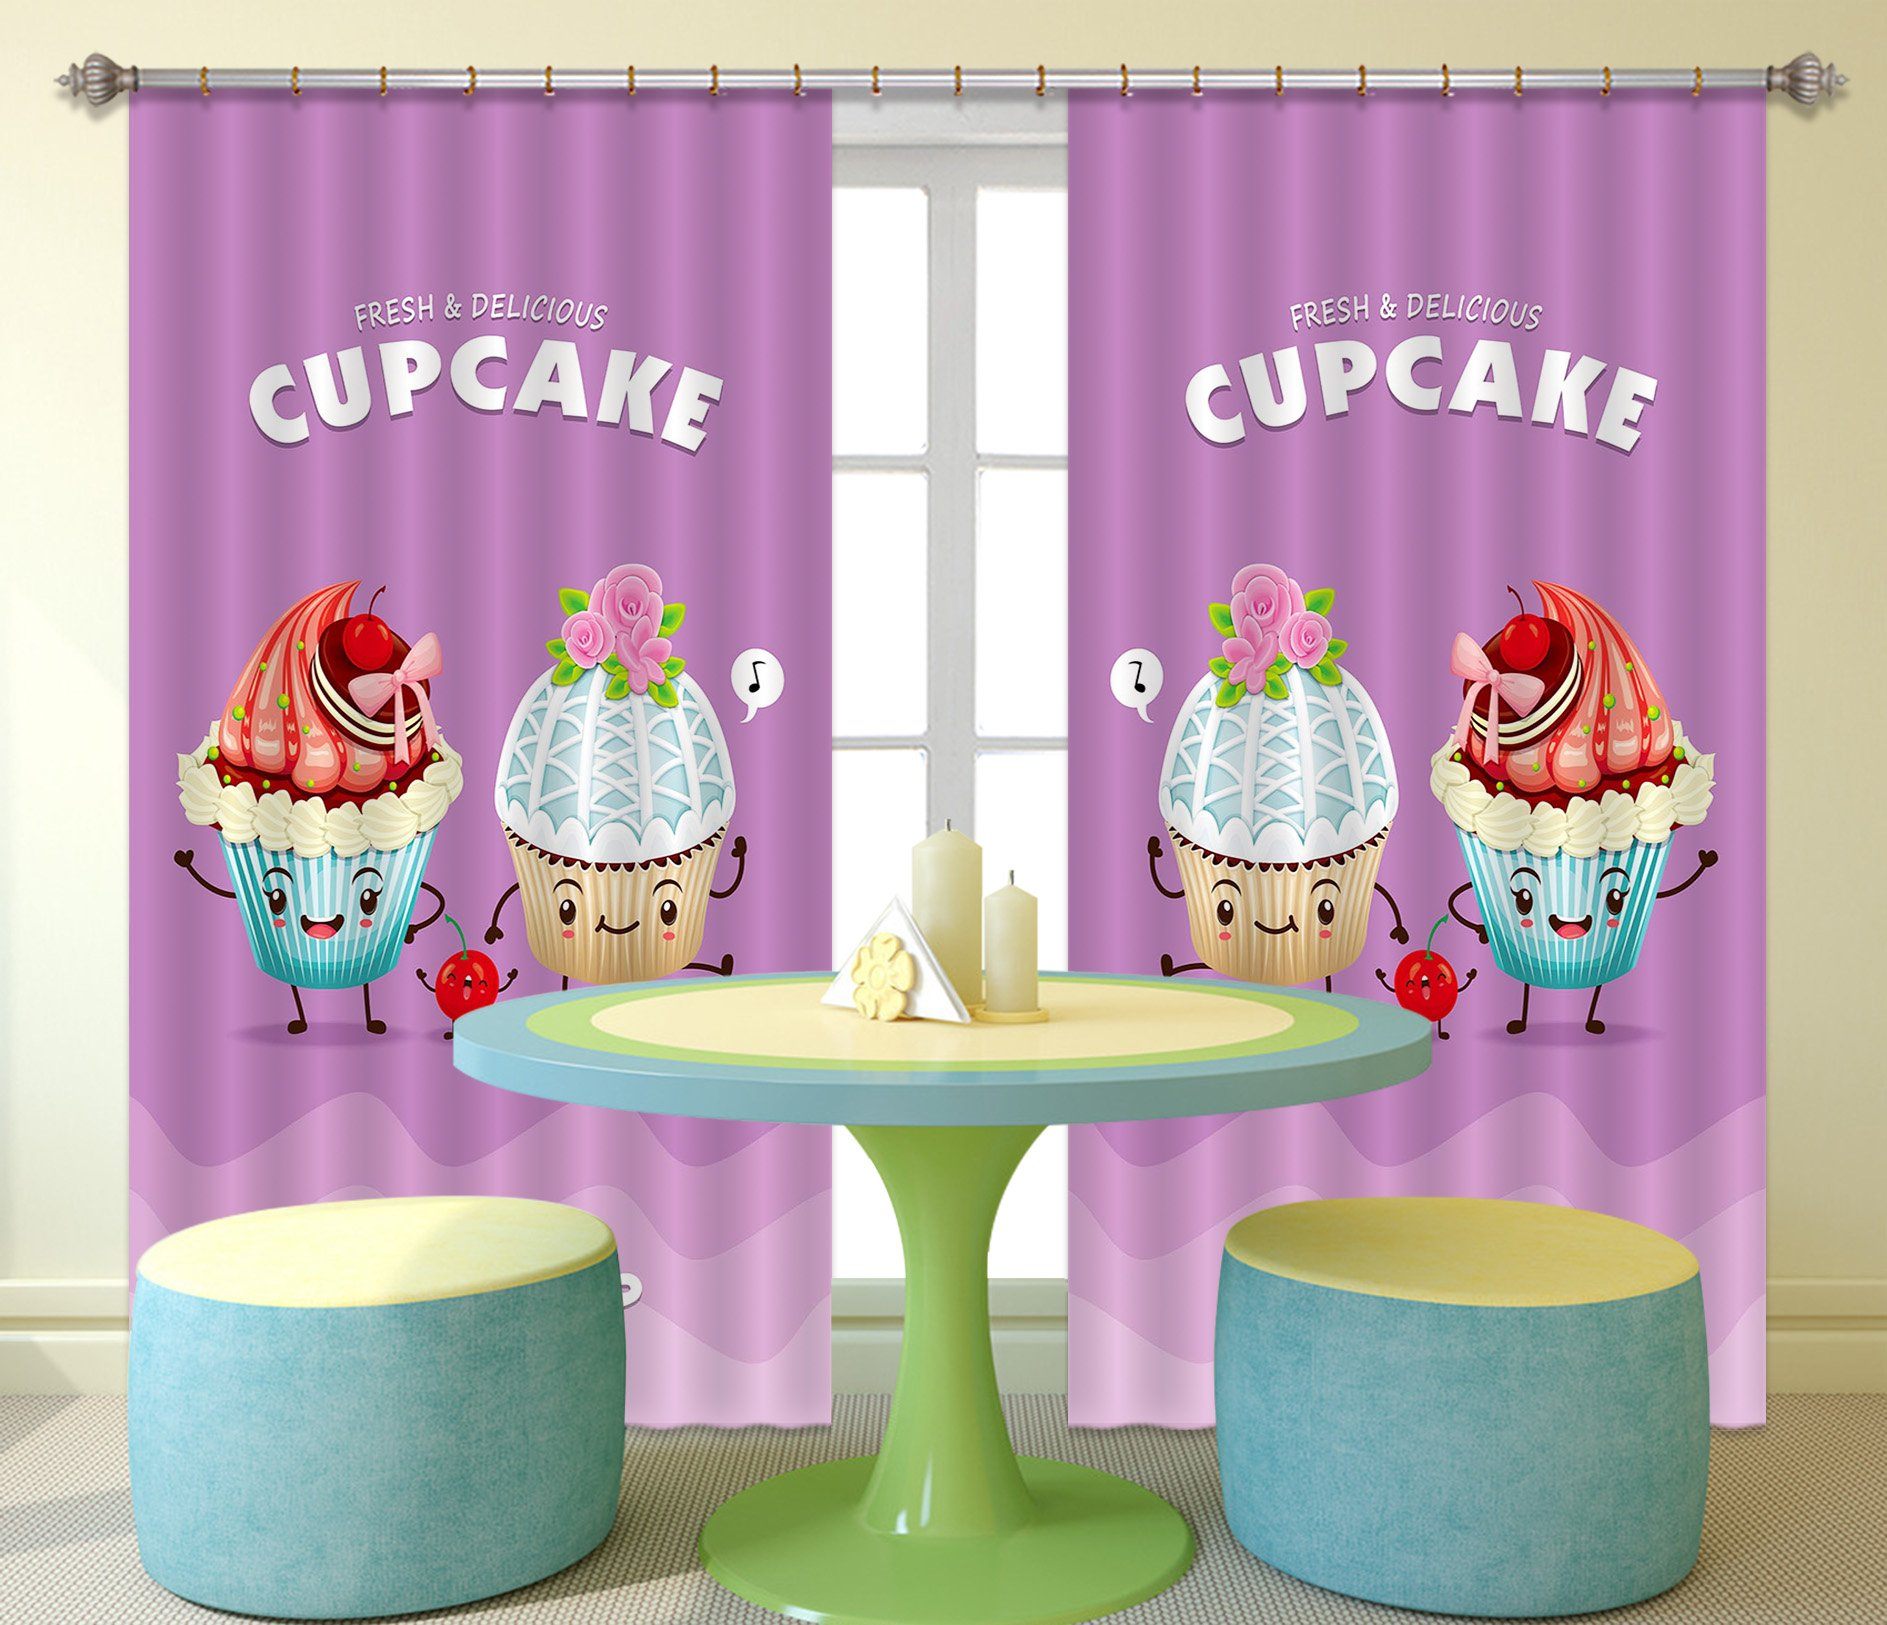 3D Cup Cakes Pattern 2407 Curtains Drapes Wallpaper AJ Wallpaper 